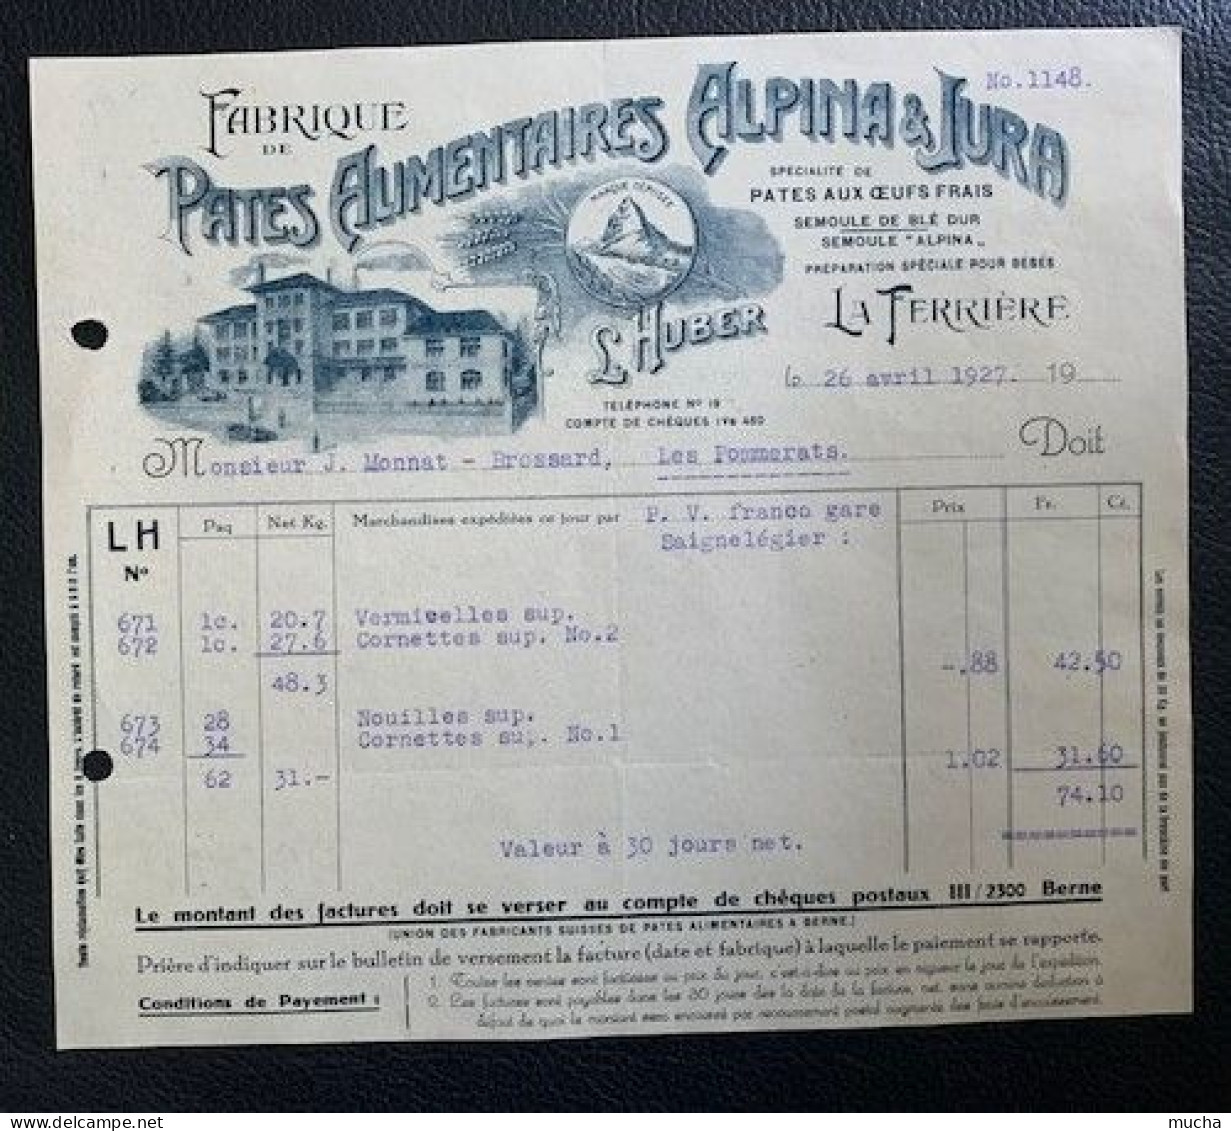 70148 - Facture Illustrée Pates Alimentaires Alpina & Jura La Ferrière 26.04.1922 - Switzerland